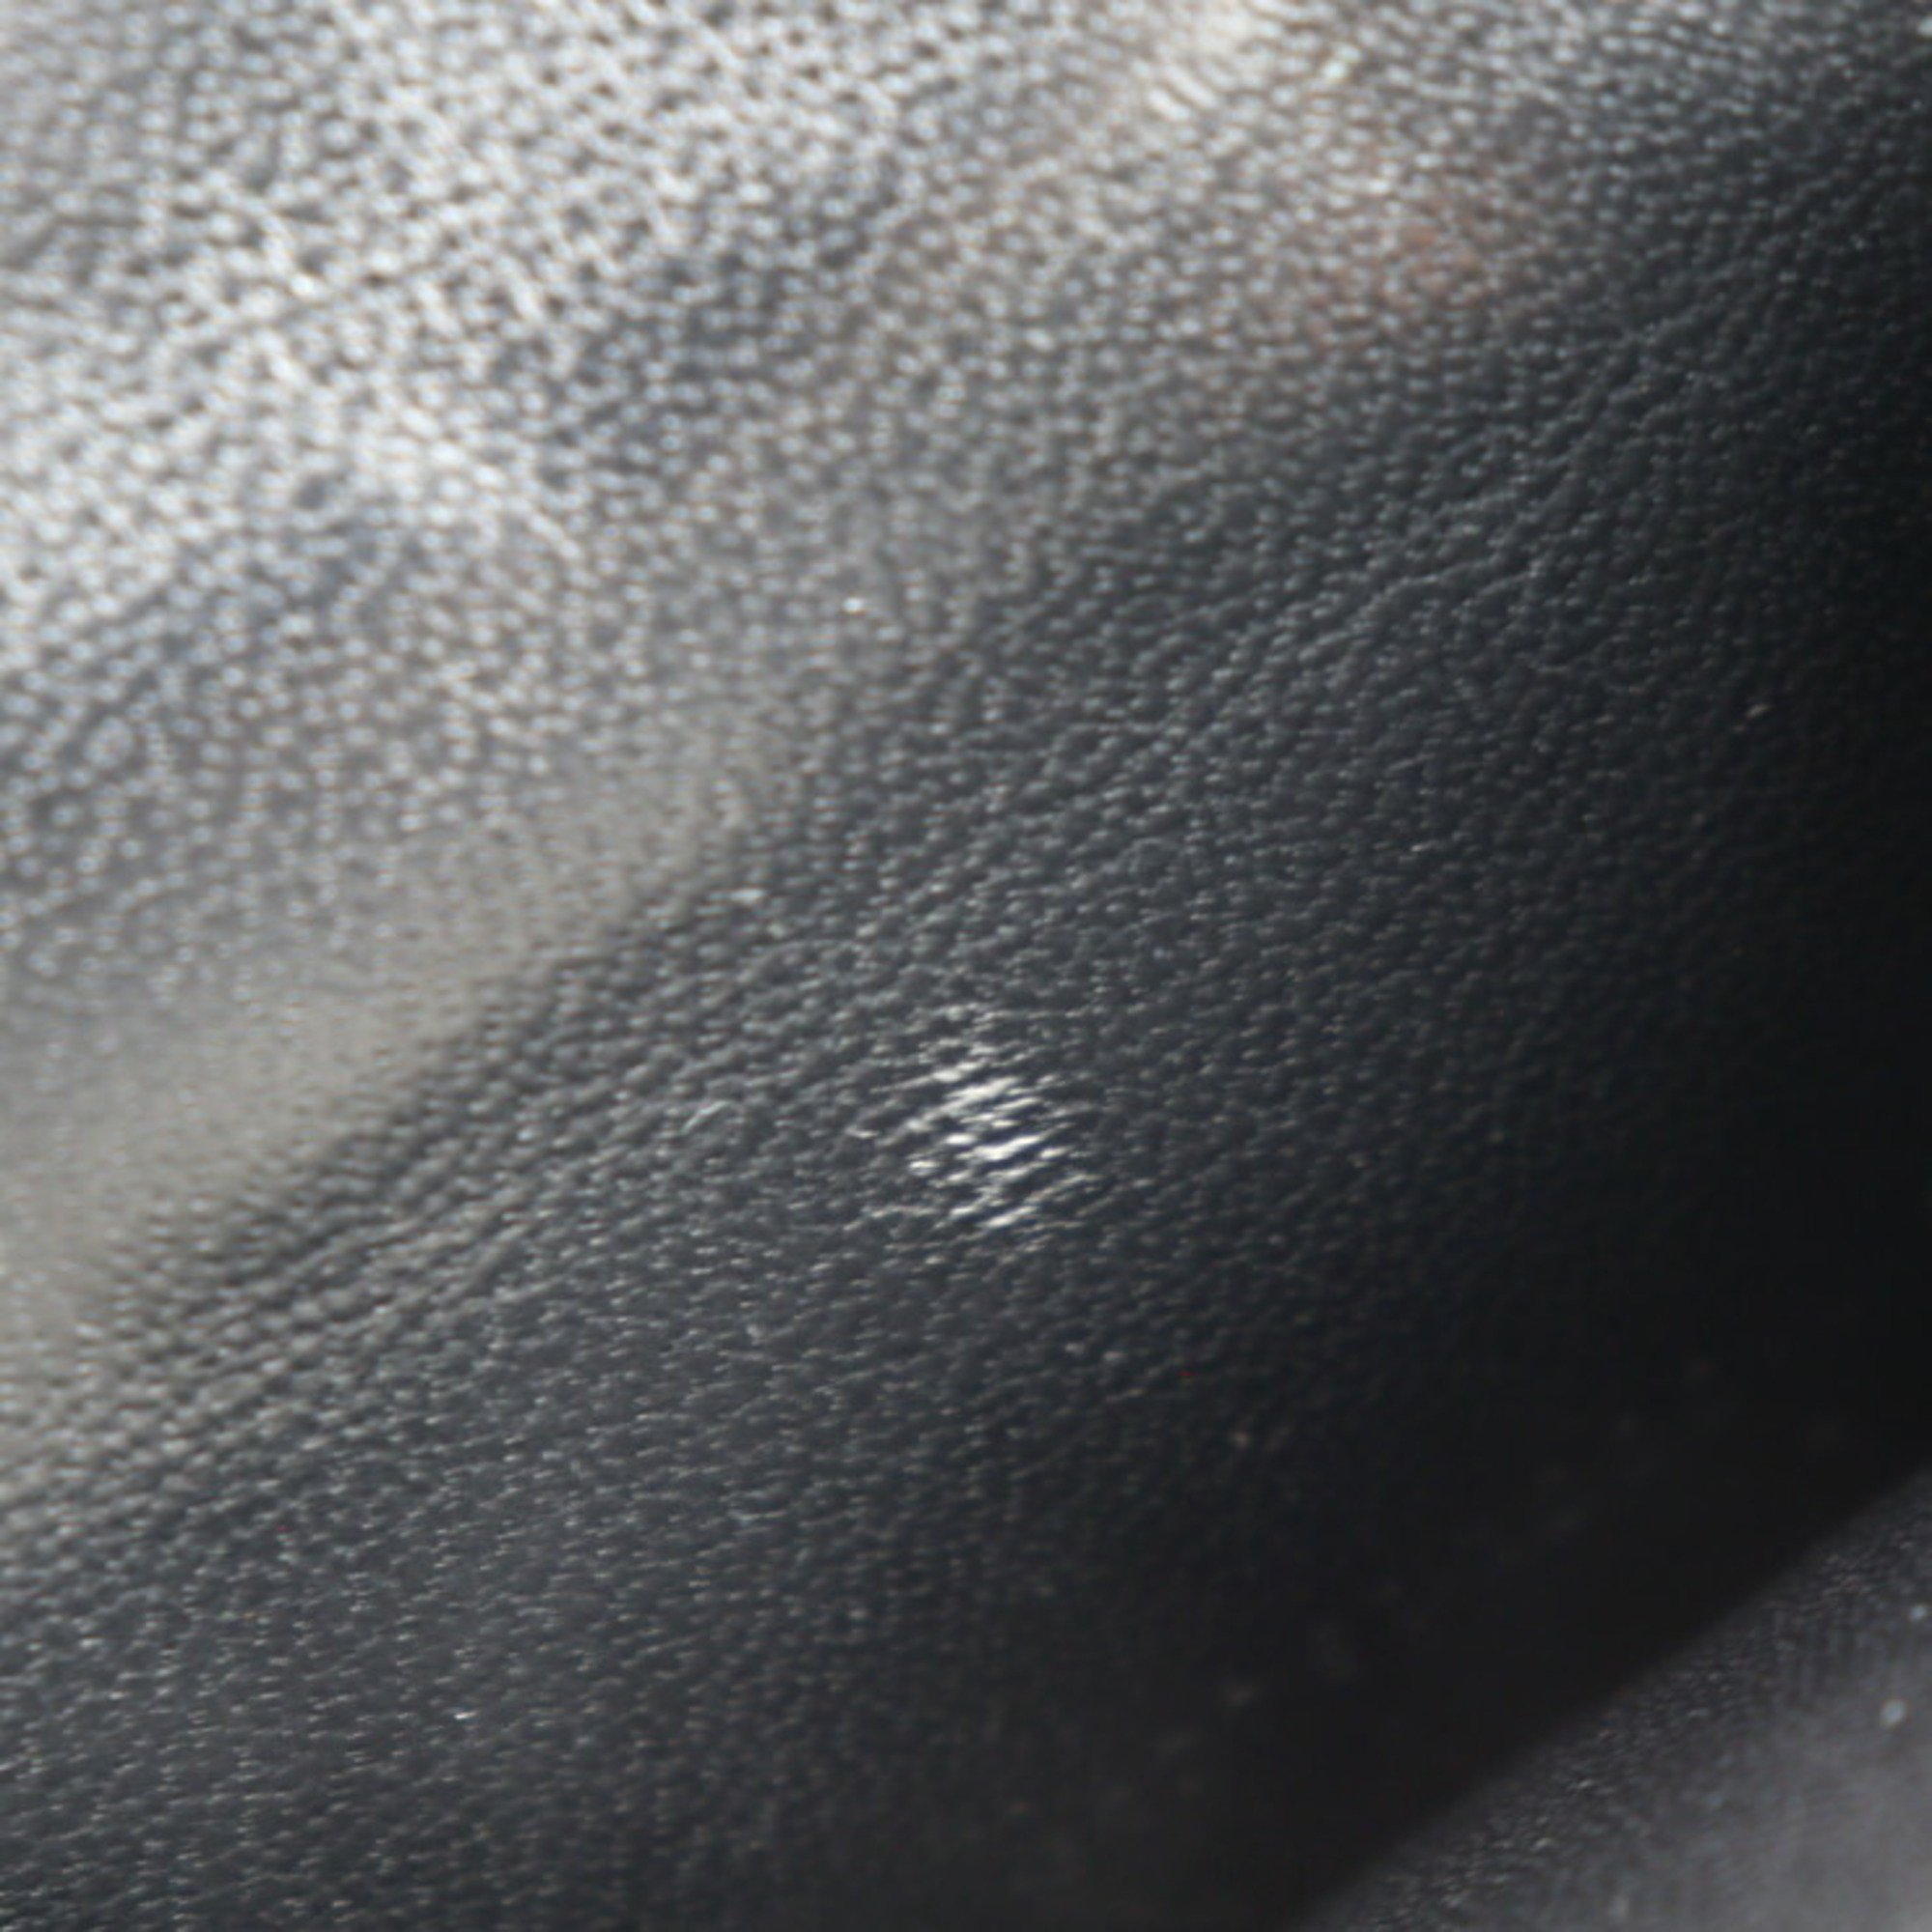 BALENCIAGA Trifold Wallet 617781 Leather Black B Logo W Hook Mini Compact Quilting